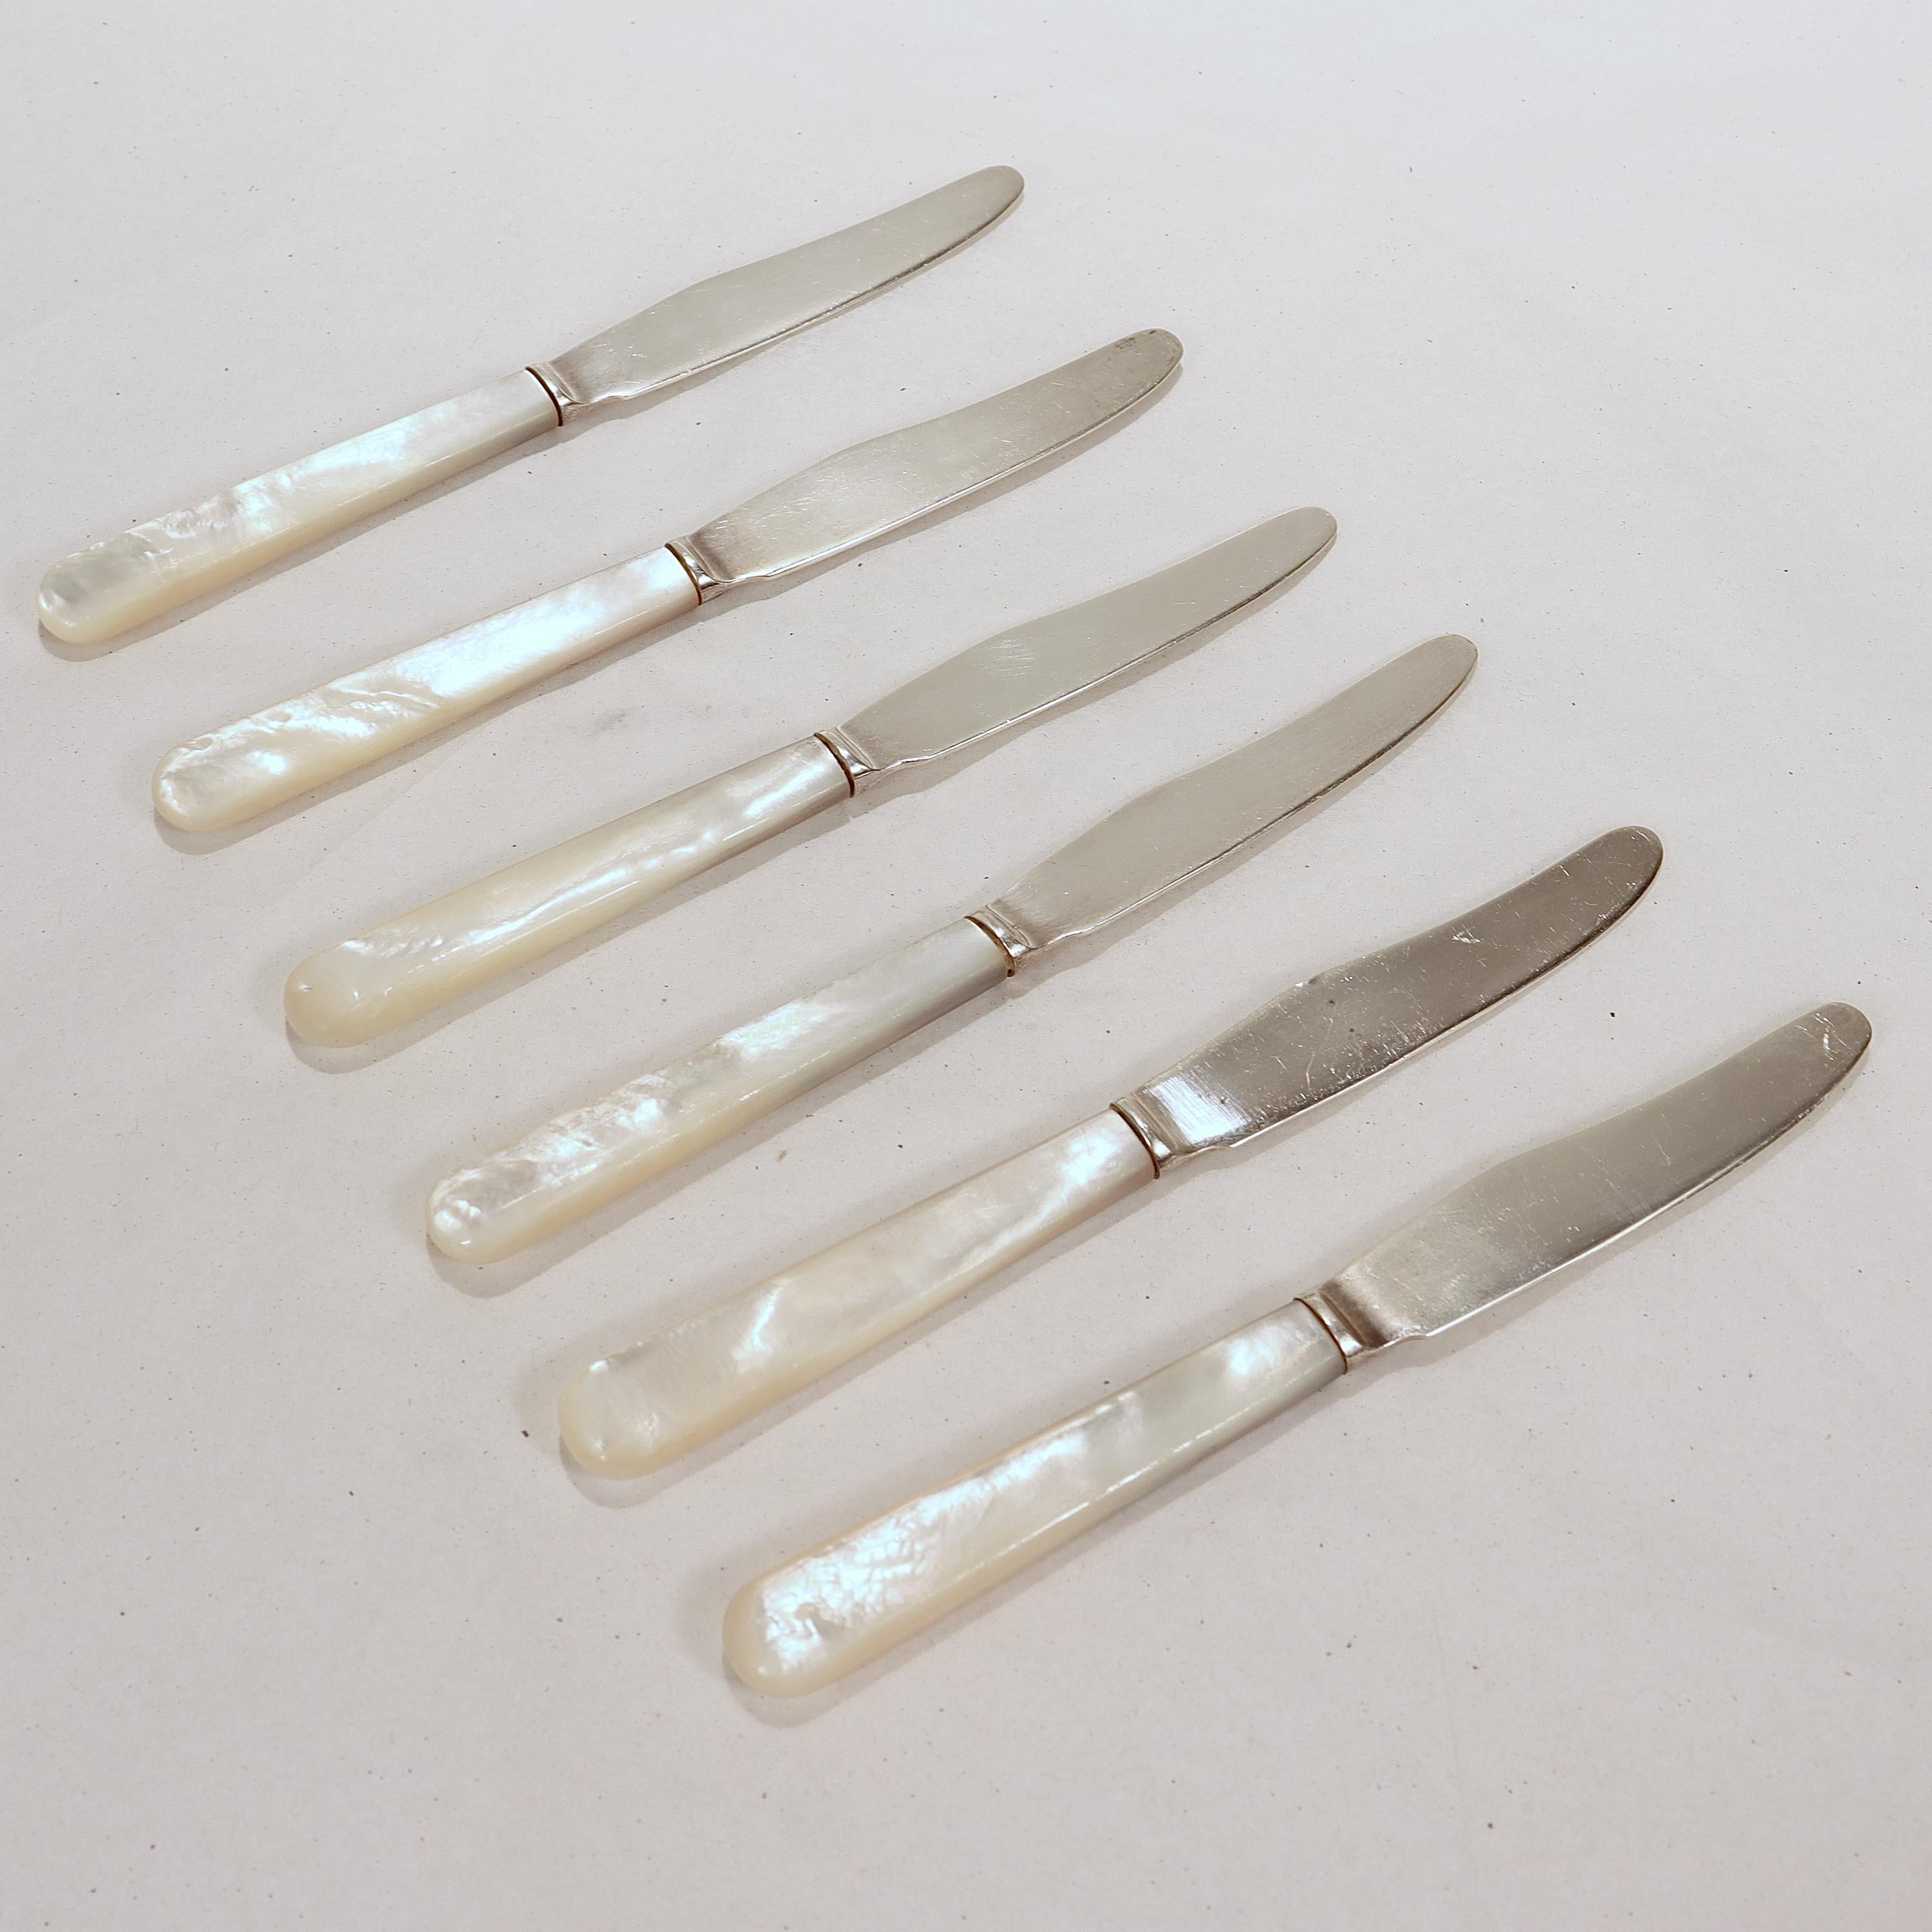 knife blades for sale